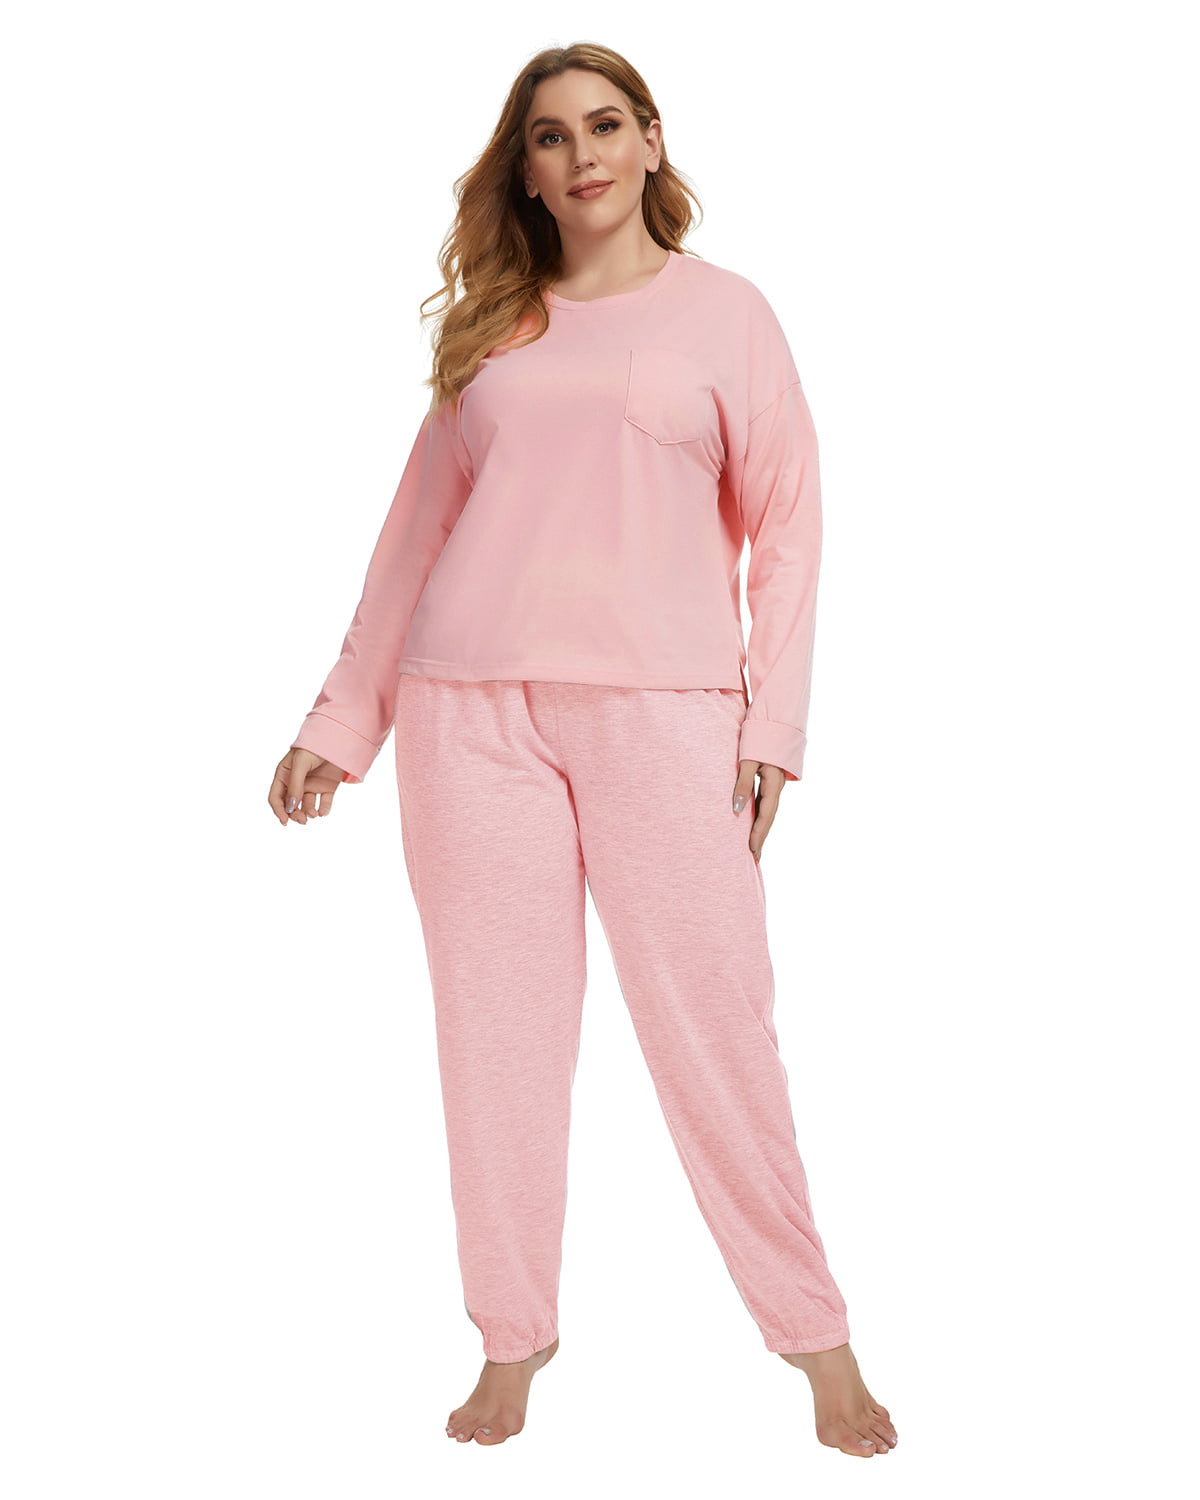 MINTLIMIT Women's Pyjama Bottoms Ladies Soft Long Pants Casual Pure Color Full Length Loungewear Sleepwear PJs Cotton Trousers for Yoga Sports Gym 